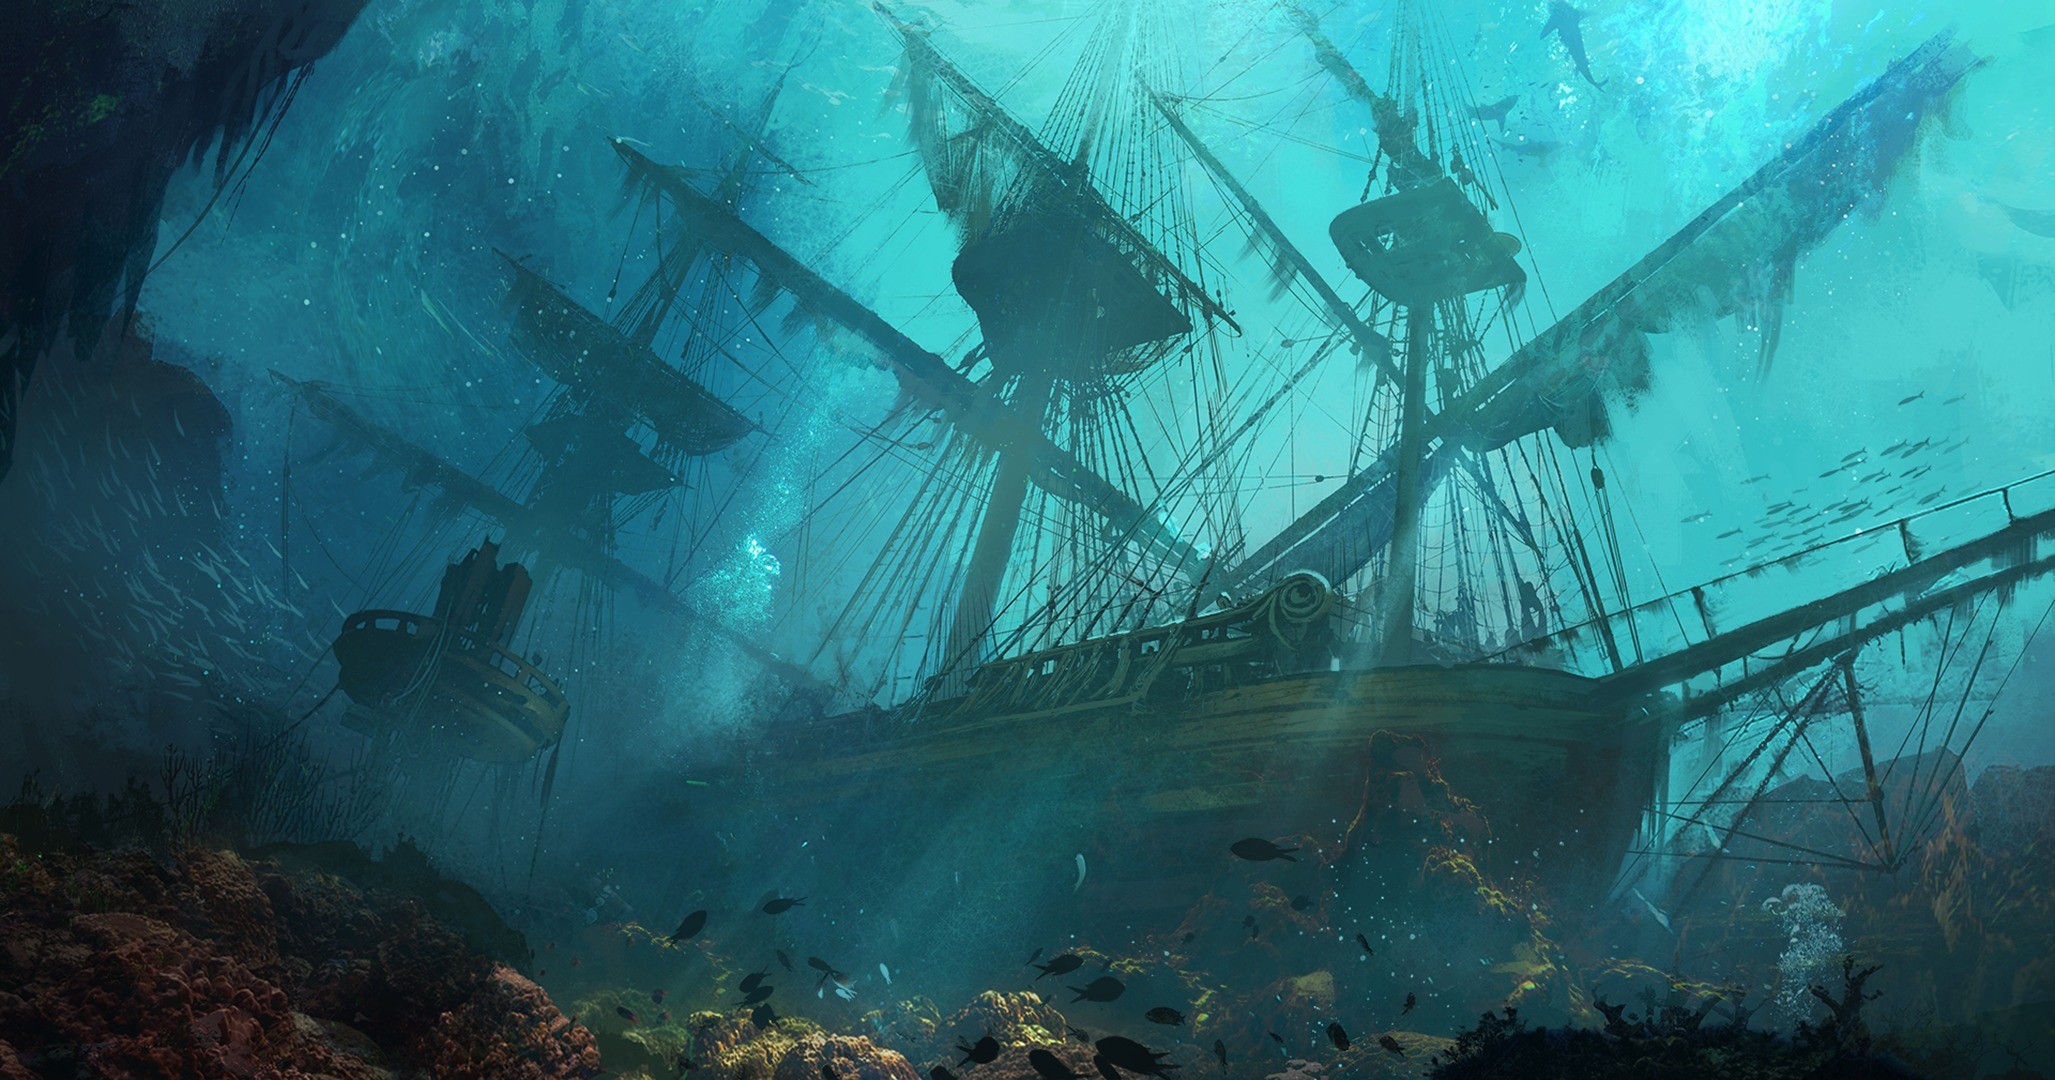 Artwork Sinking Ships Ship Drawing Sea Fantasy Art Shipwreck Underwater Turquoise Cyan Teal Wallpaper:2055x1080